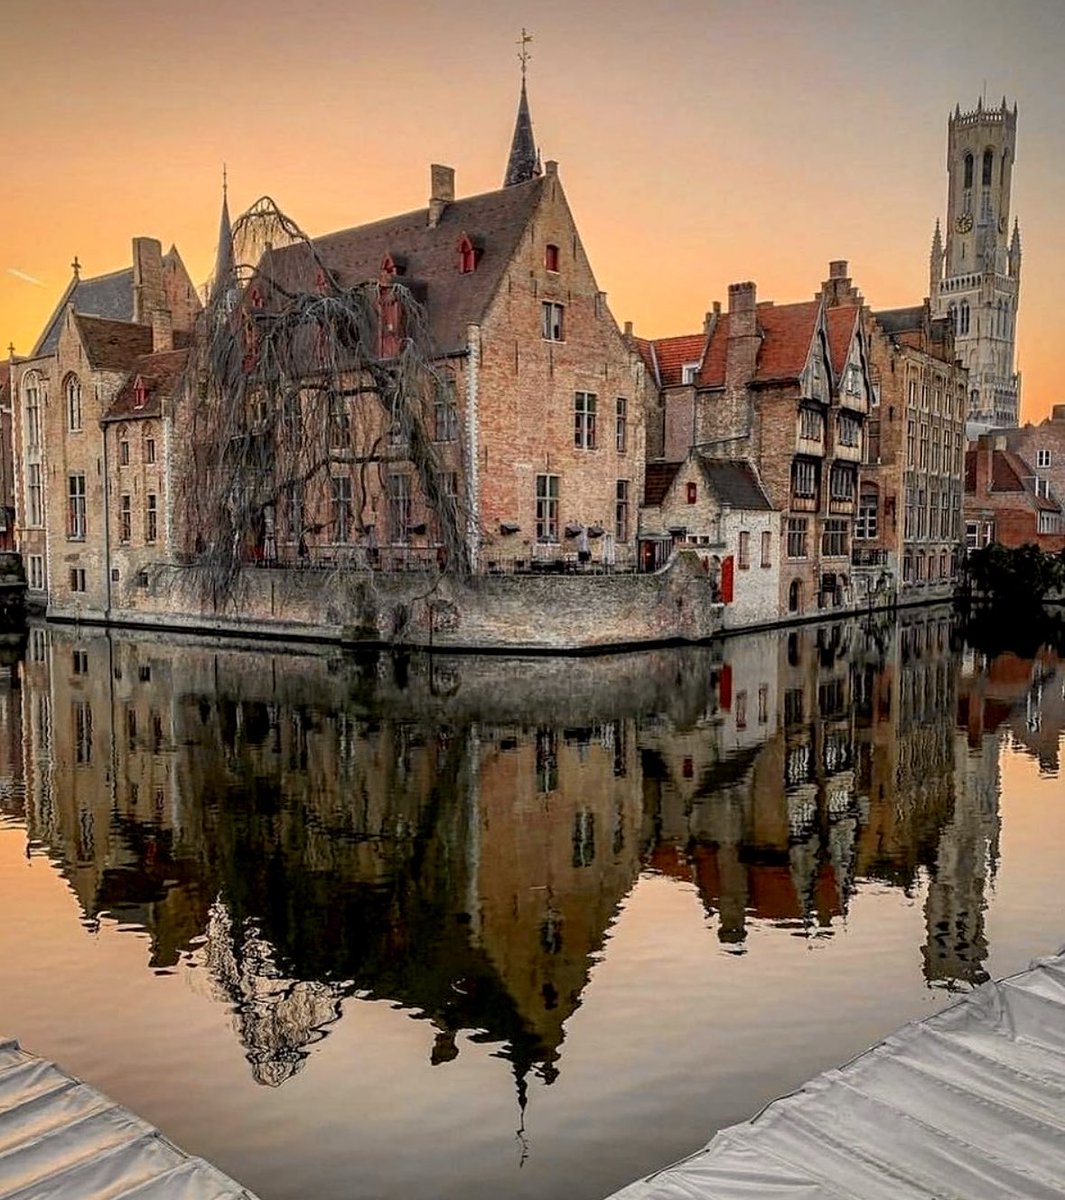 Sunrise - Bruges, Belgium
© Incredible Europe